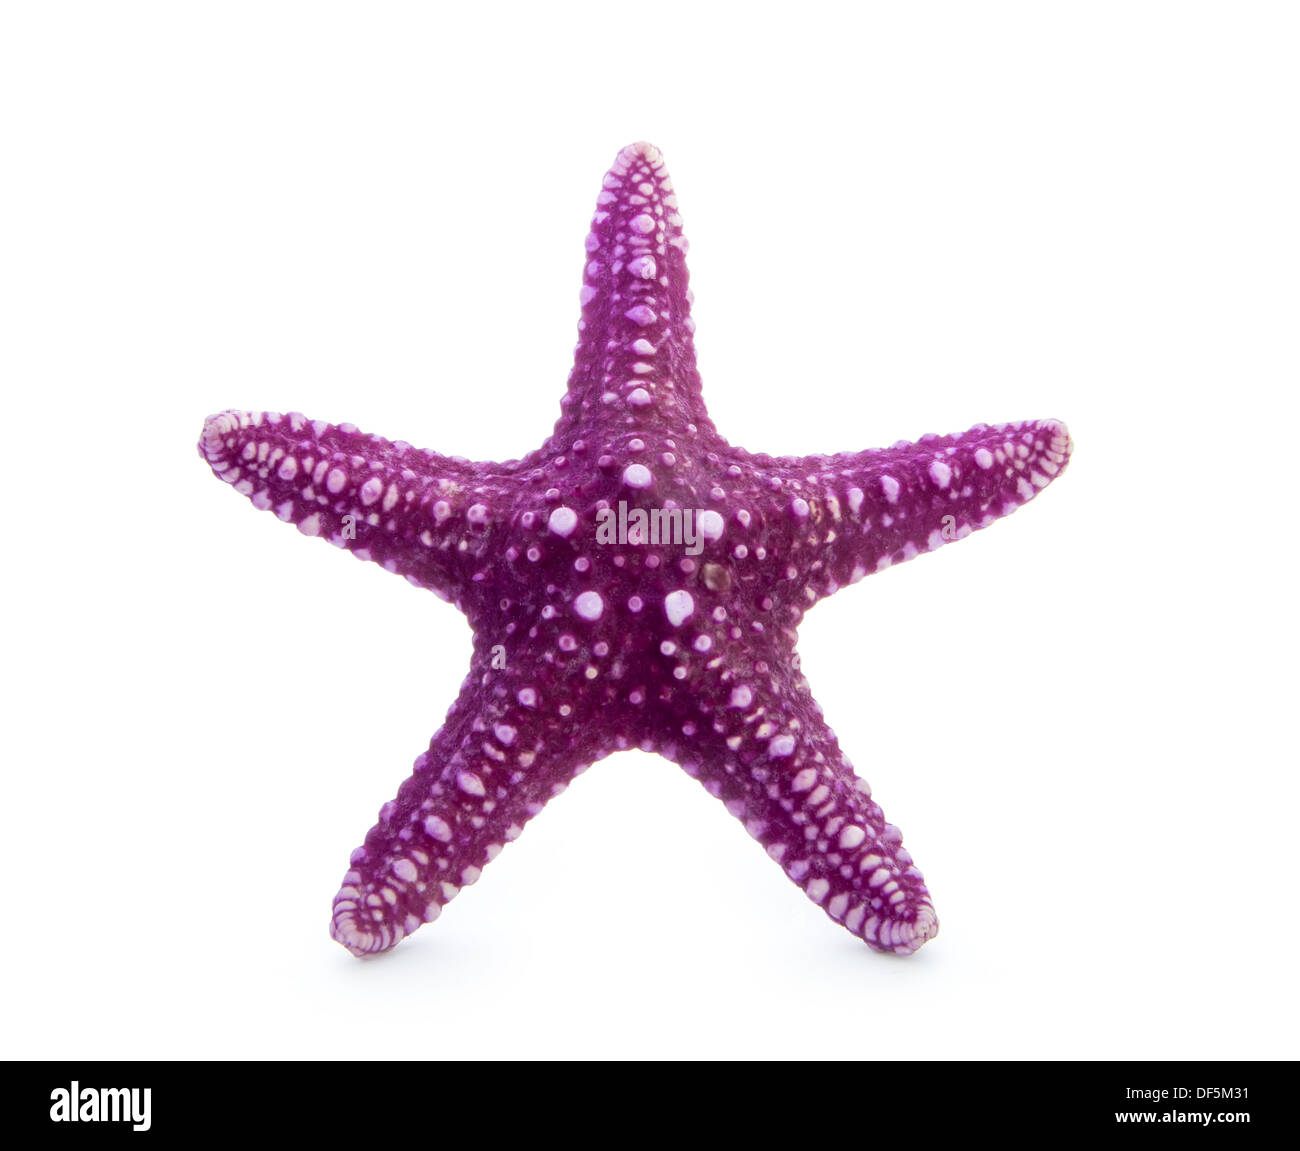 Estrella de mar violeta de ICA (16 cm) — ICA S.A.